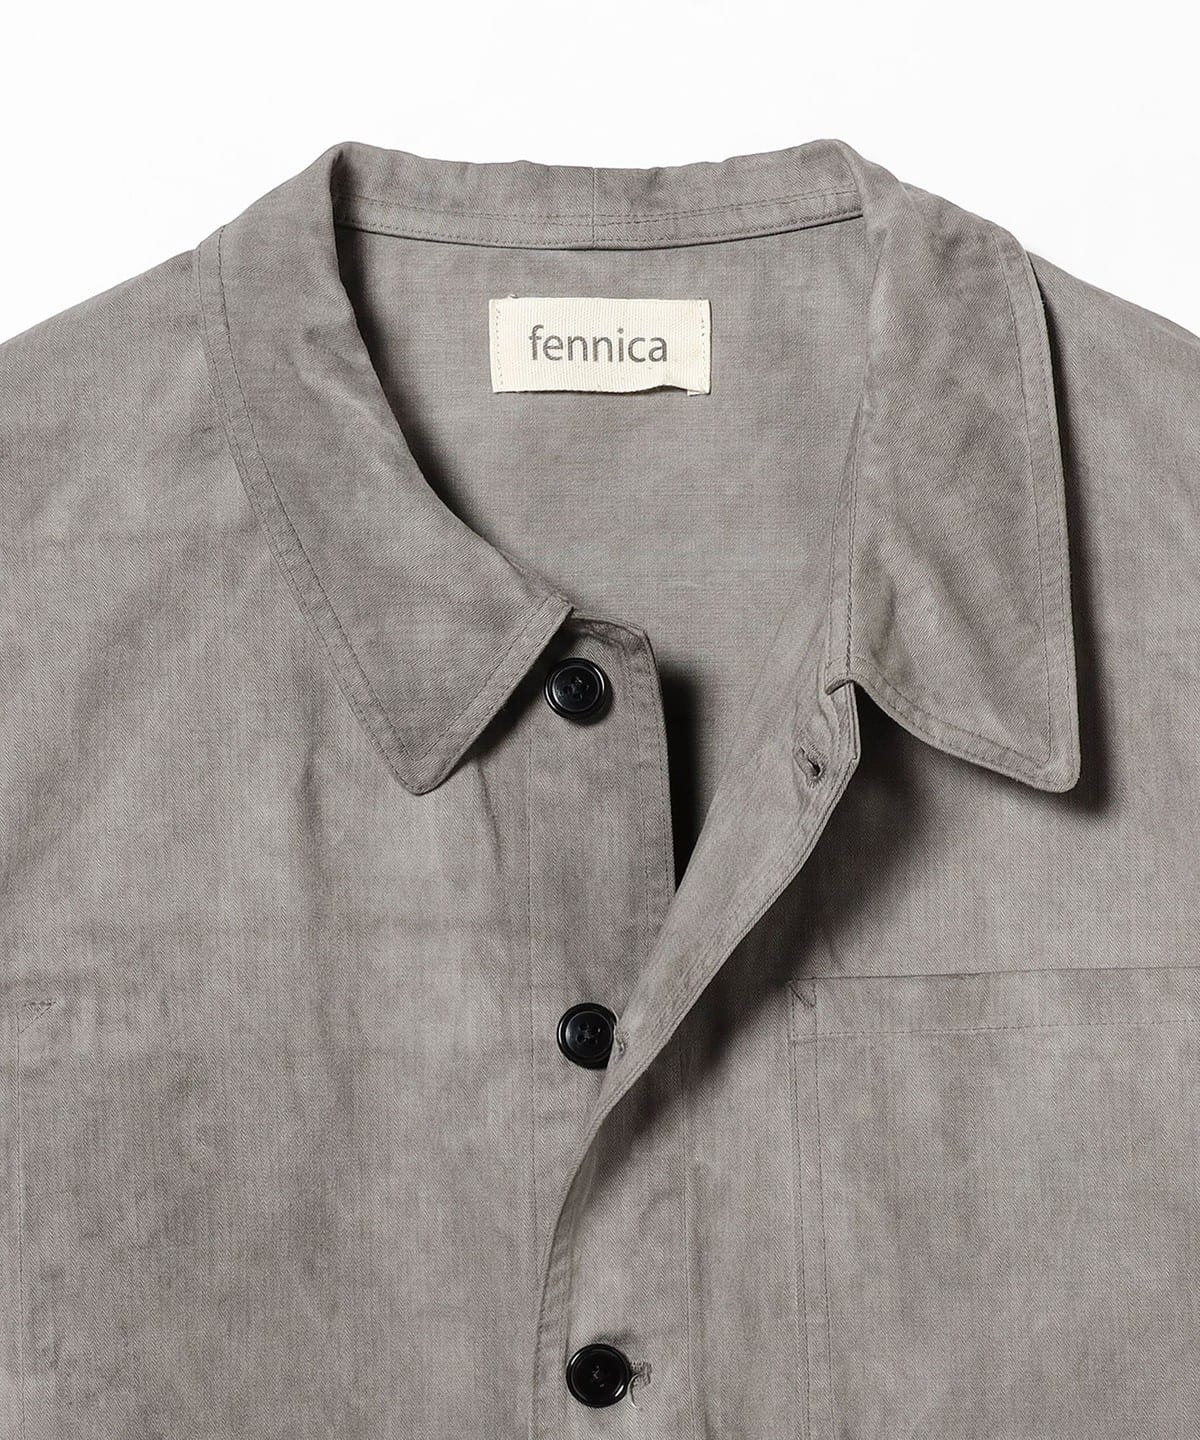 fennica（フェニカ）fennica / 墨染め French work Court Jacket